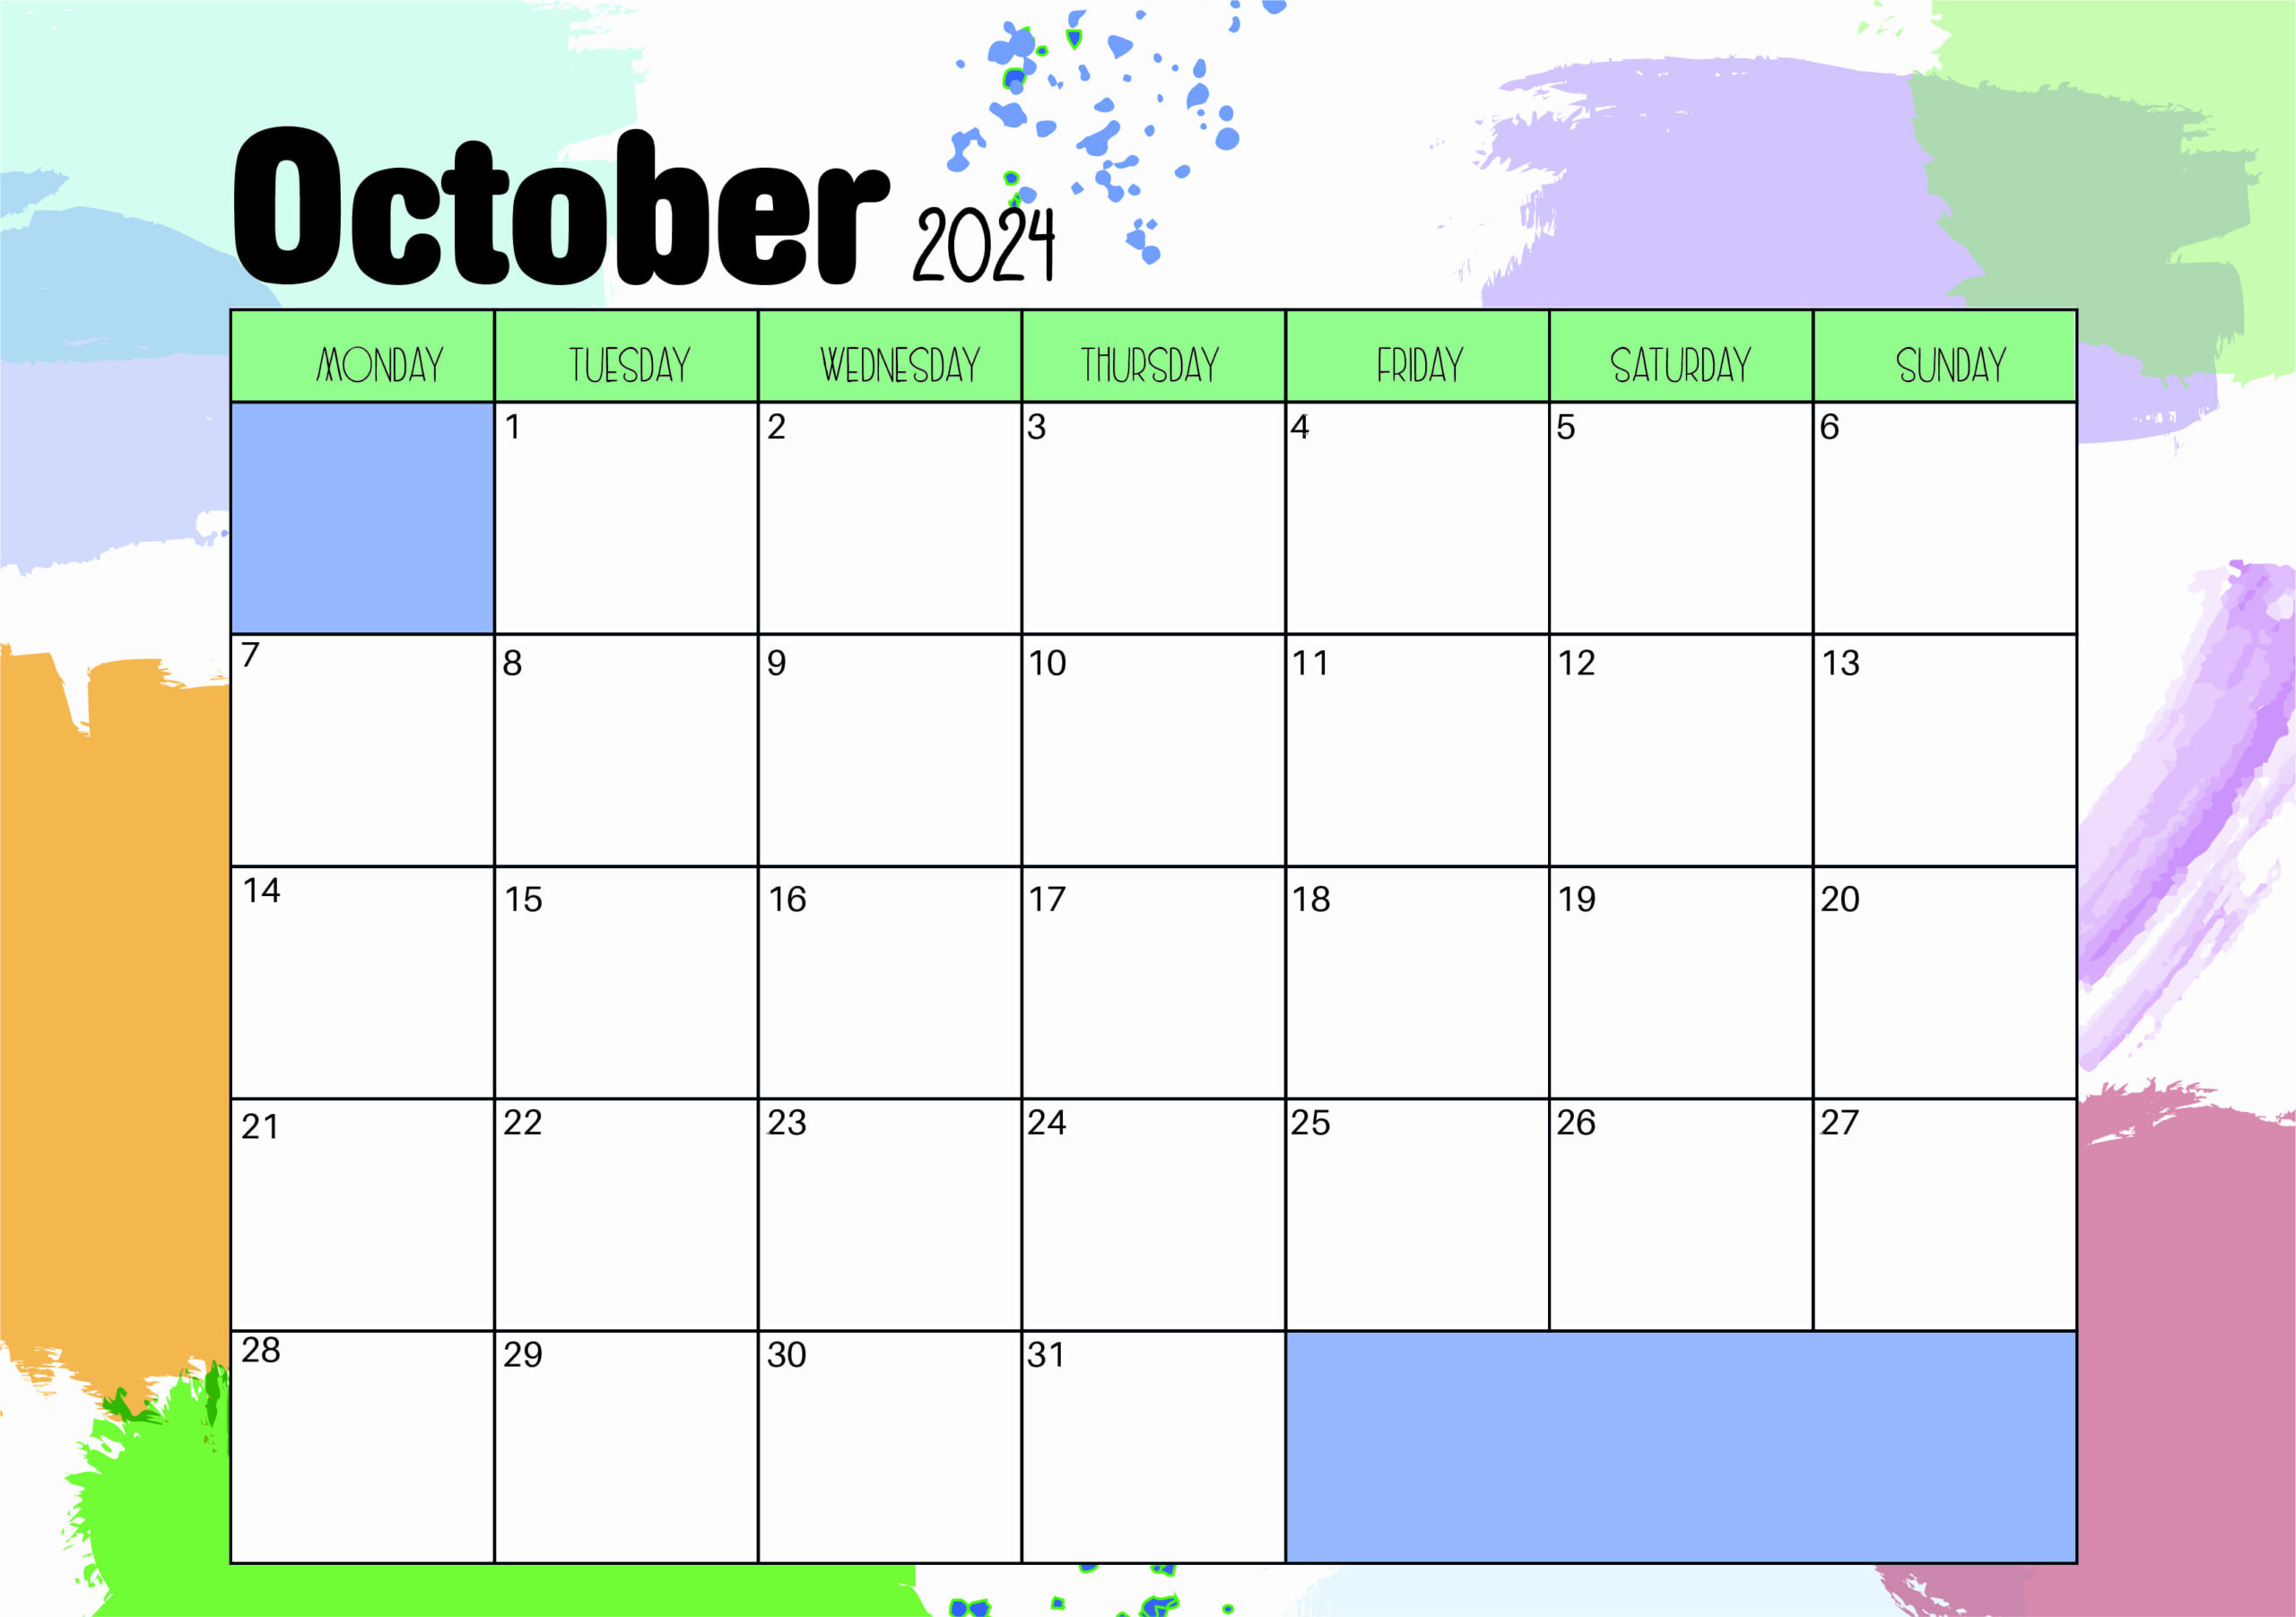 October 2024 Calendar for Printing in PDF